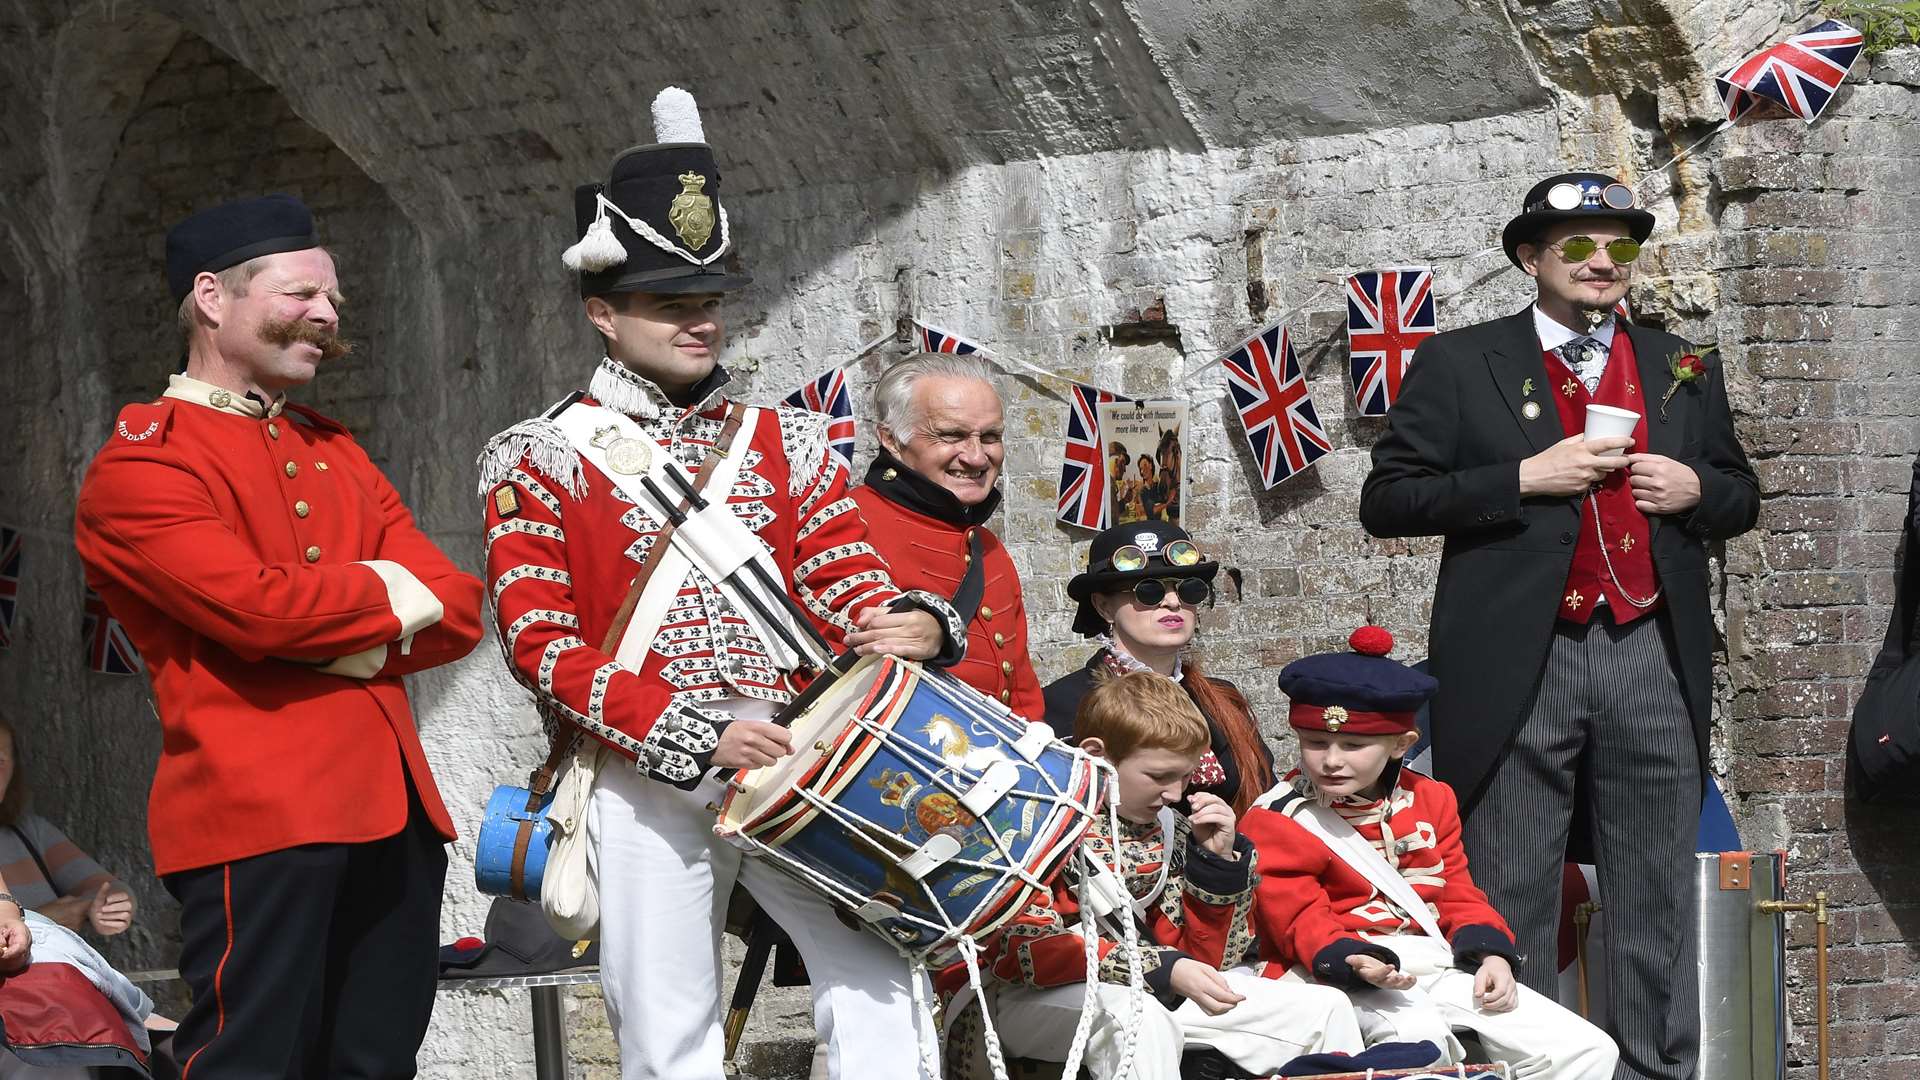 Re-enactors in Napoleonic soldier uniforms